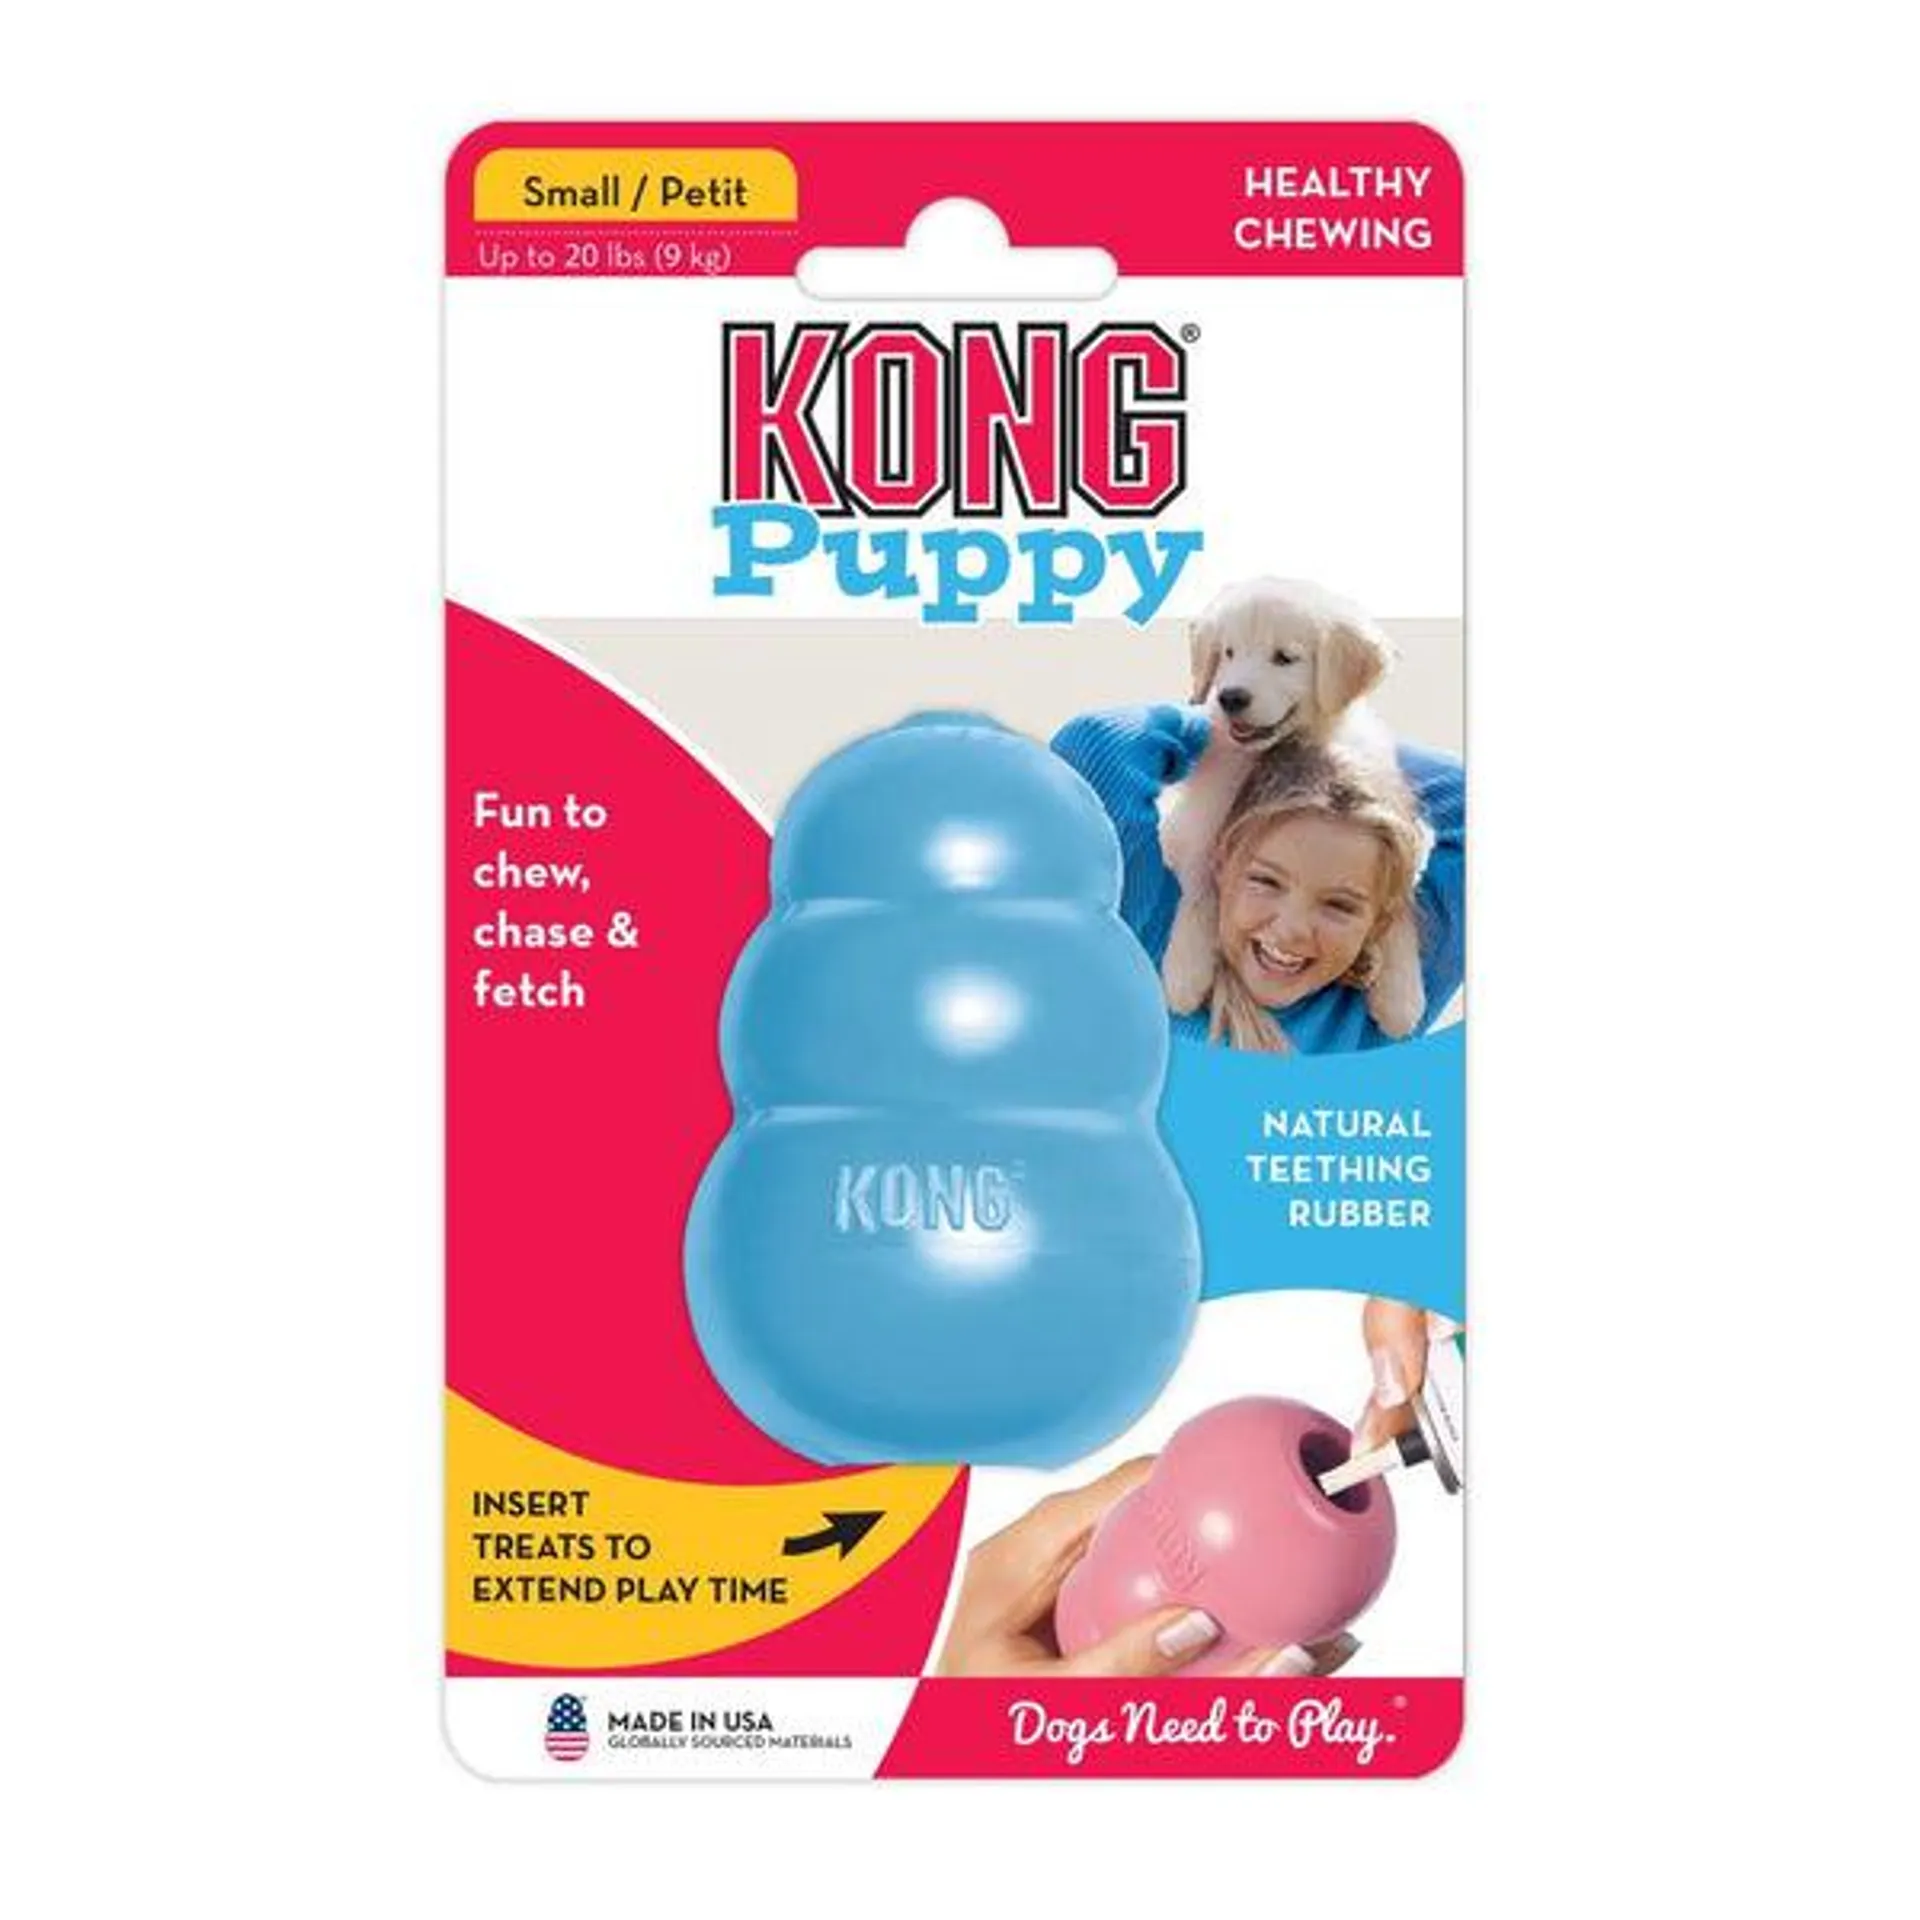 KONG - Puppy (Small)